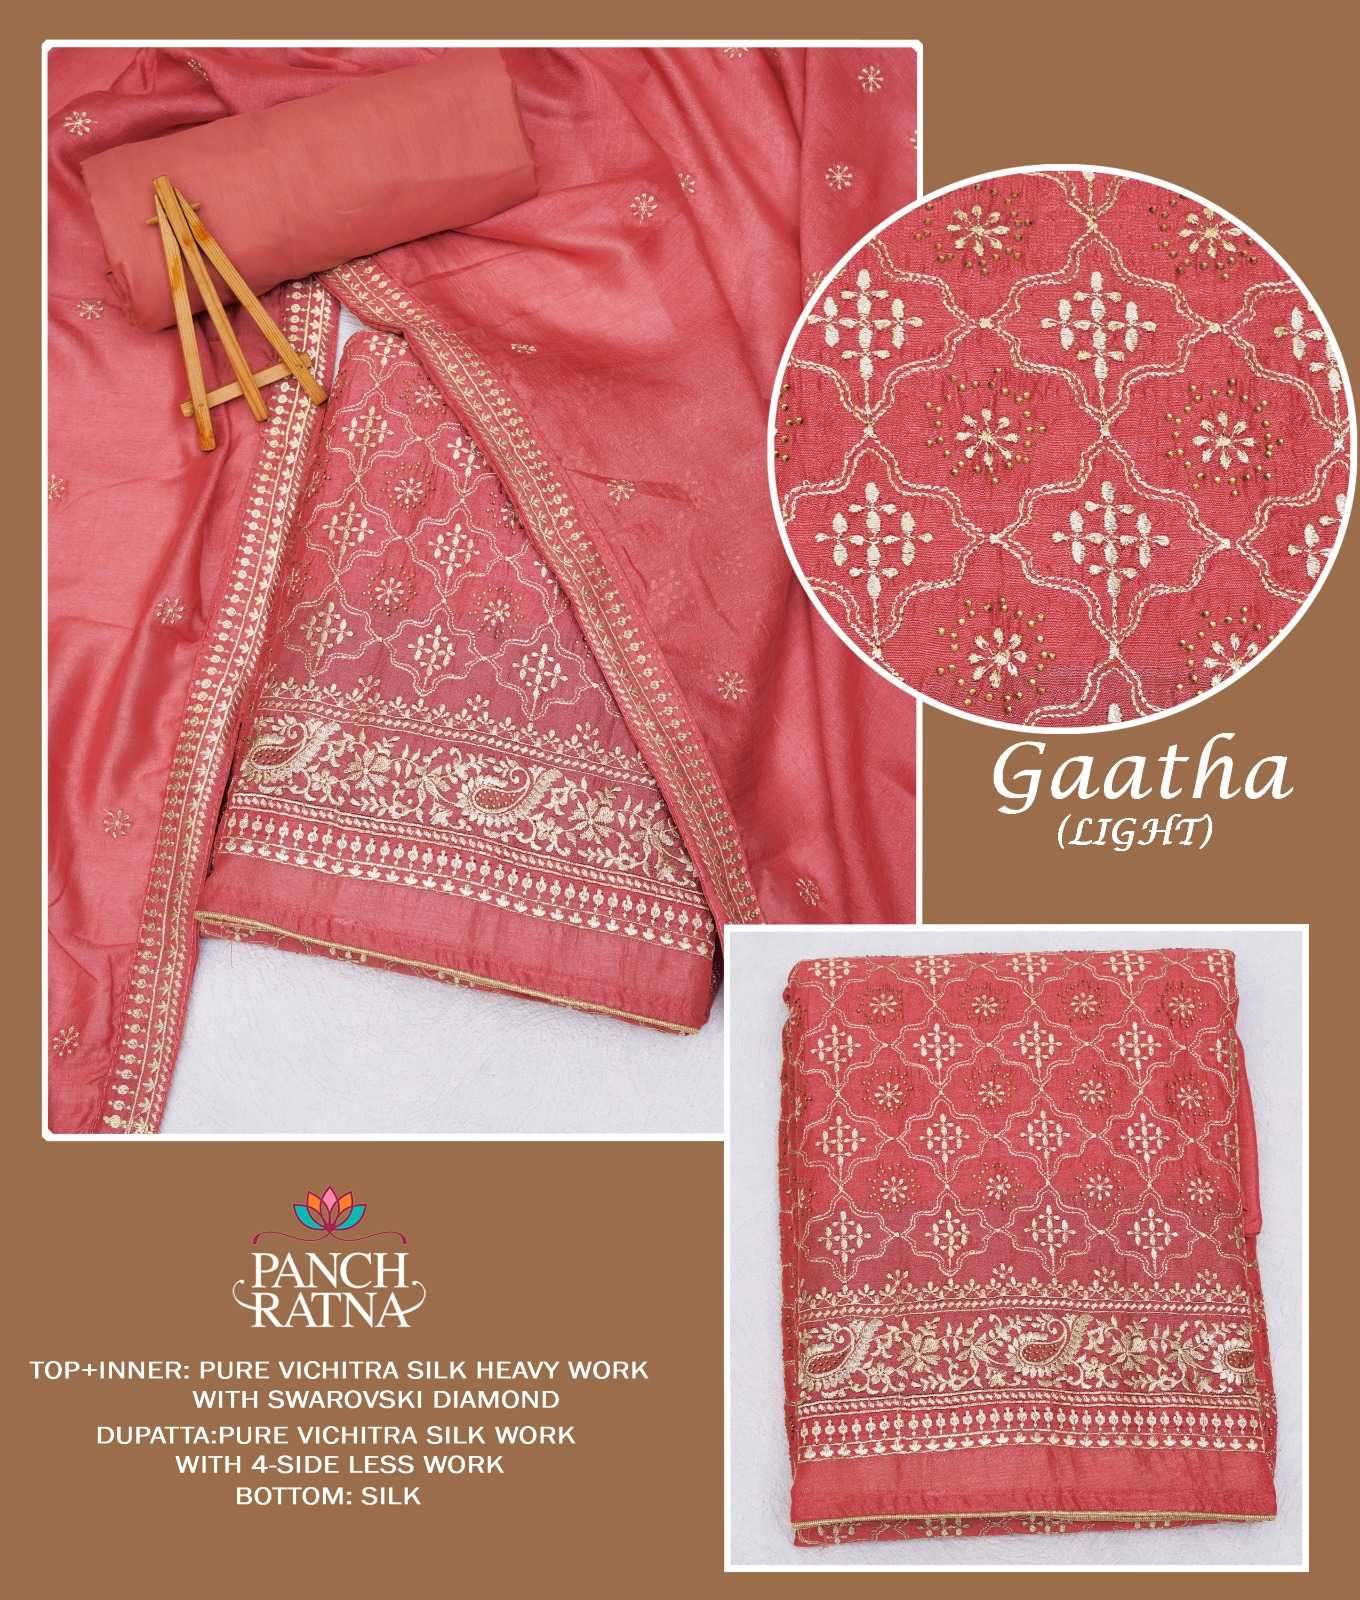 panch ratna gaatha Pure Vichitra Silk Heavy Work With Swarovski Diamond suit